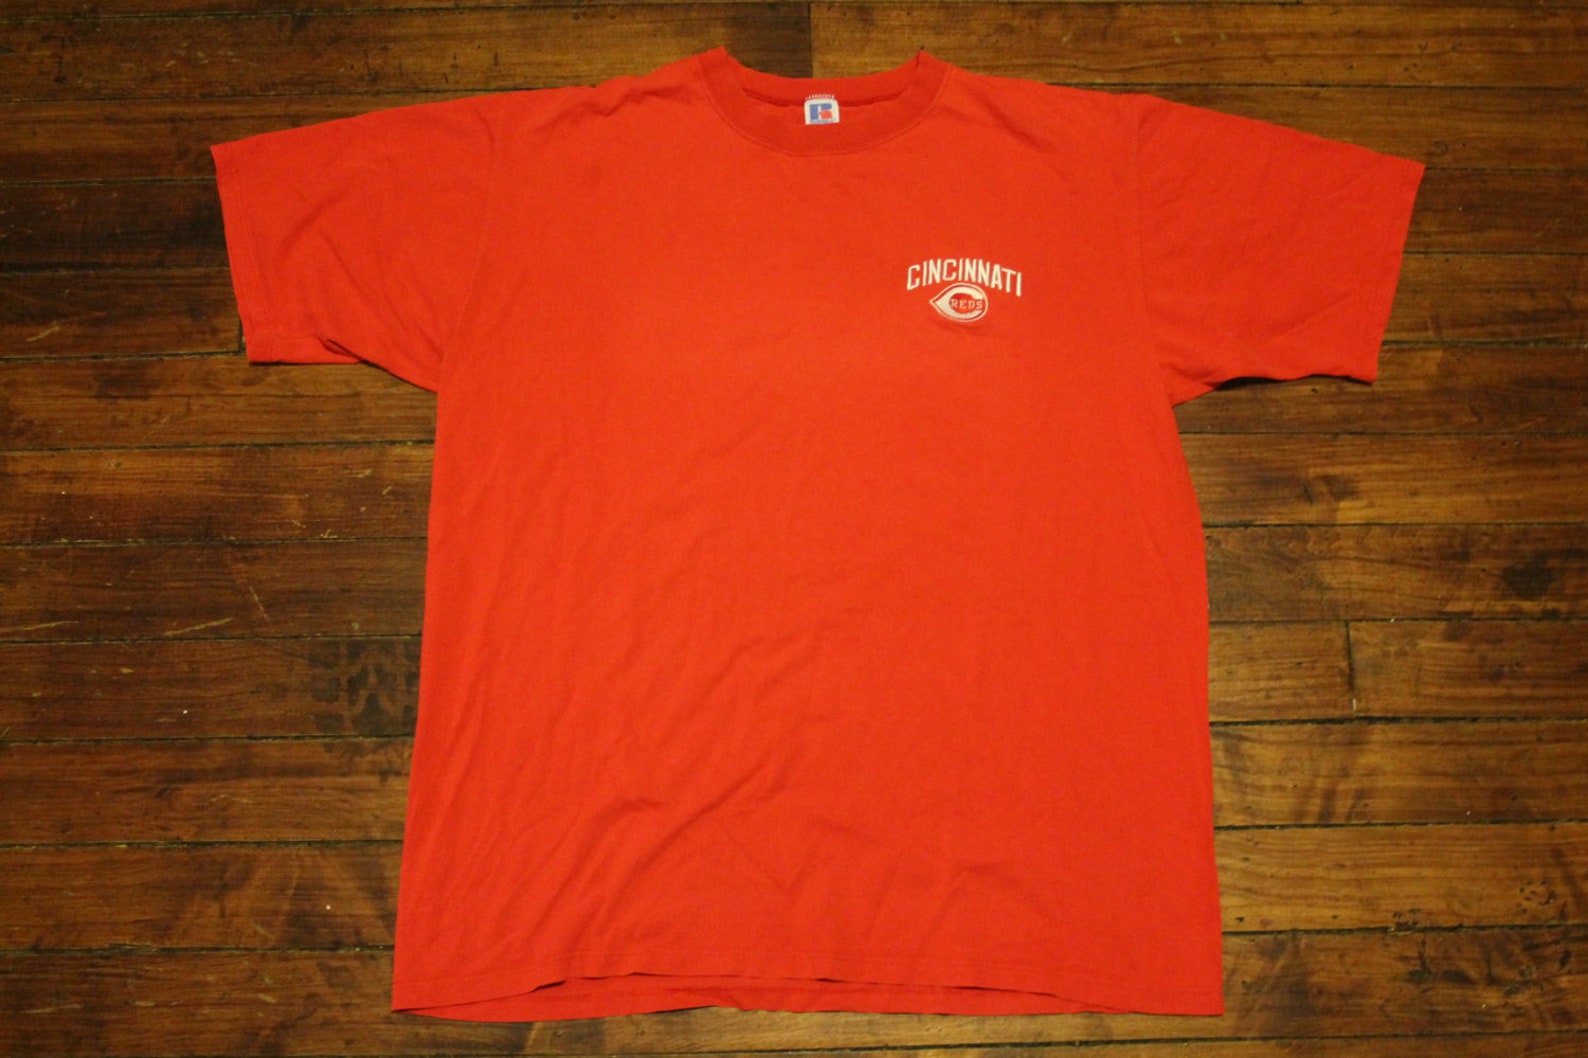 Cincinnati Reds shirt plain red tshirt with stitched emblem | Etsy